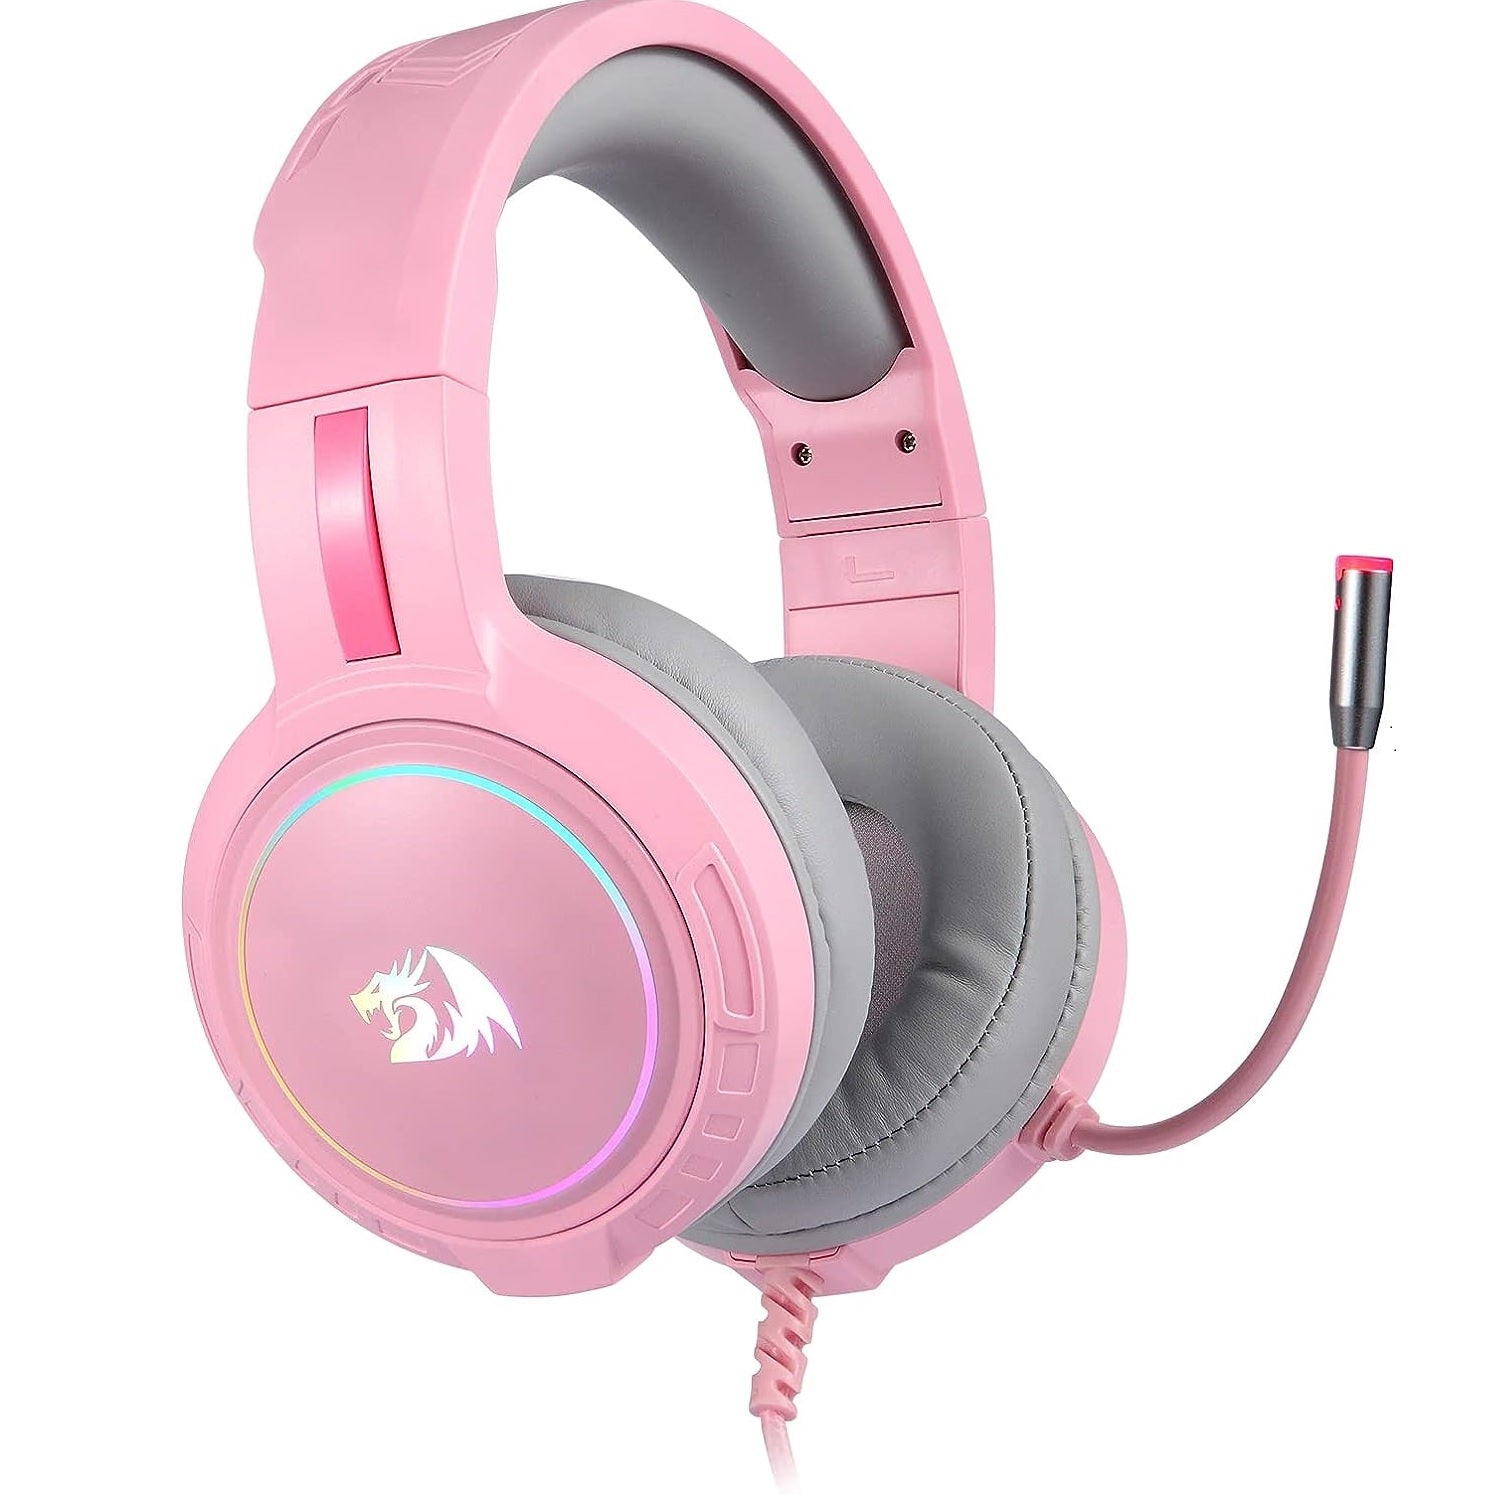 Redragon H270 MENTO RGB Gaming Headphone (Pink)